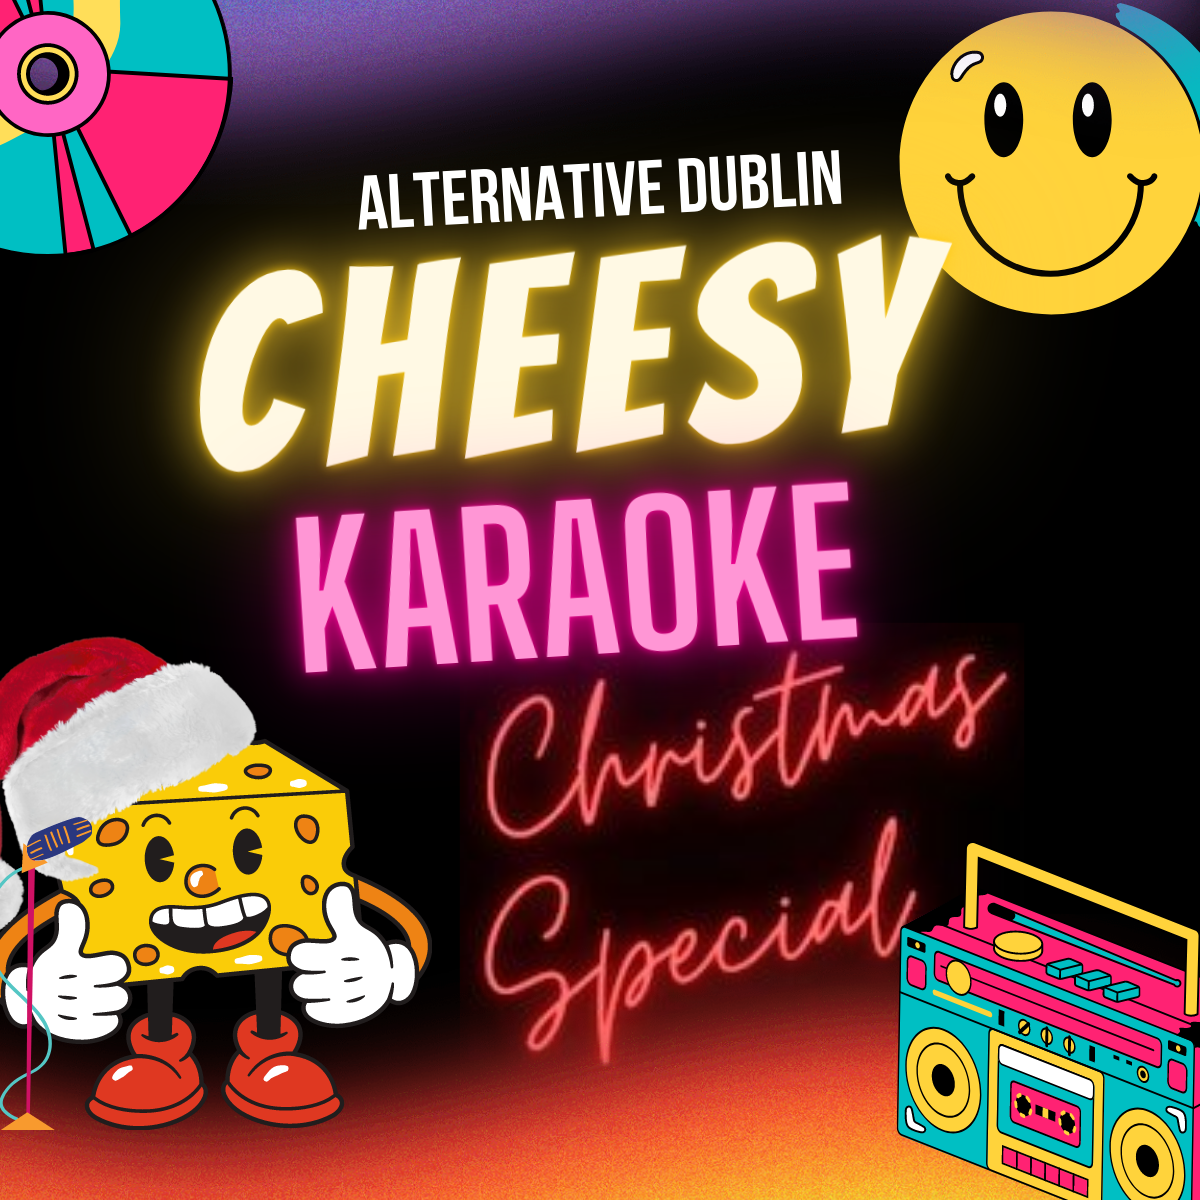 Cheesy Karaoke Christmas Event Poster